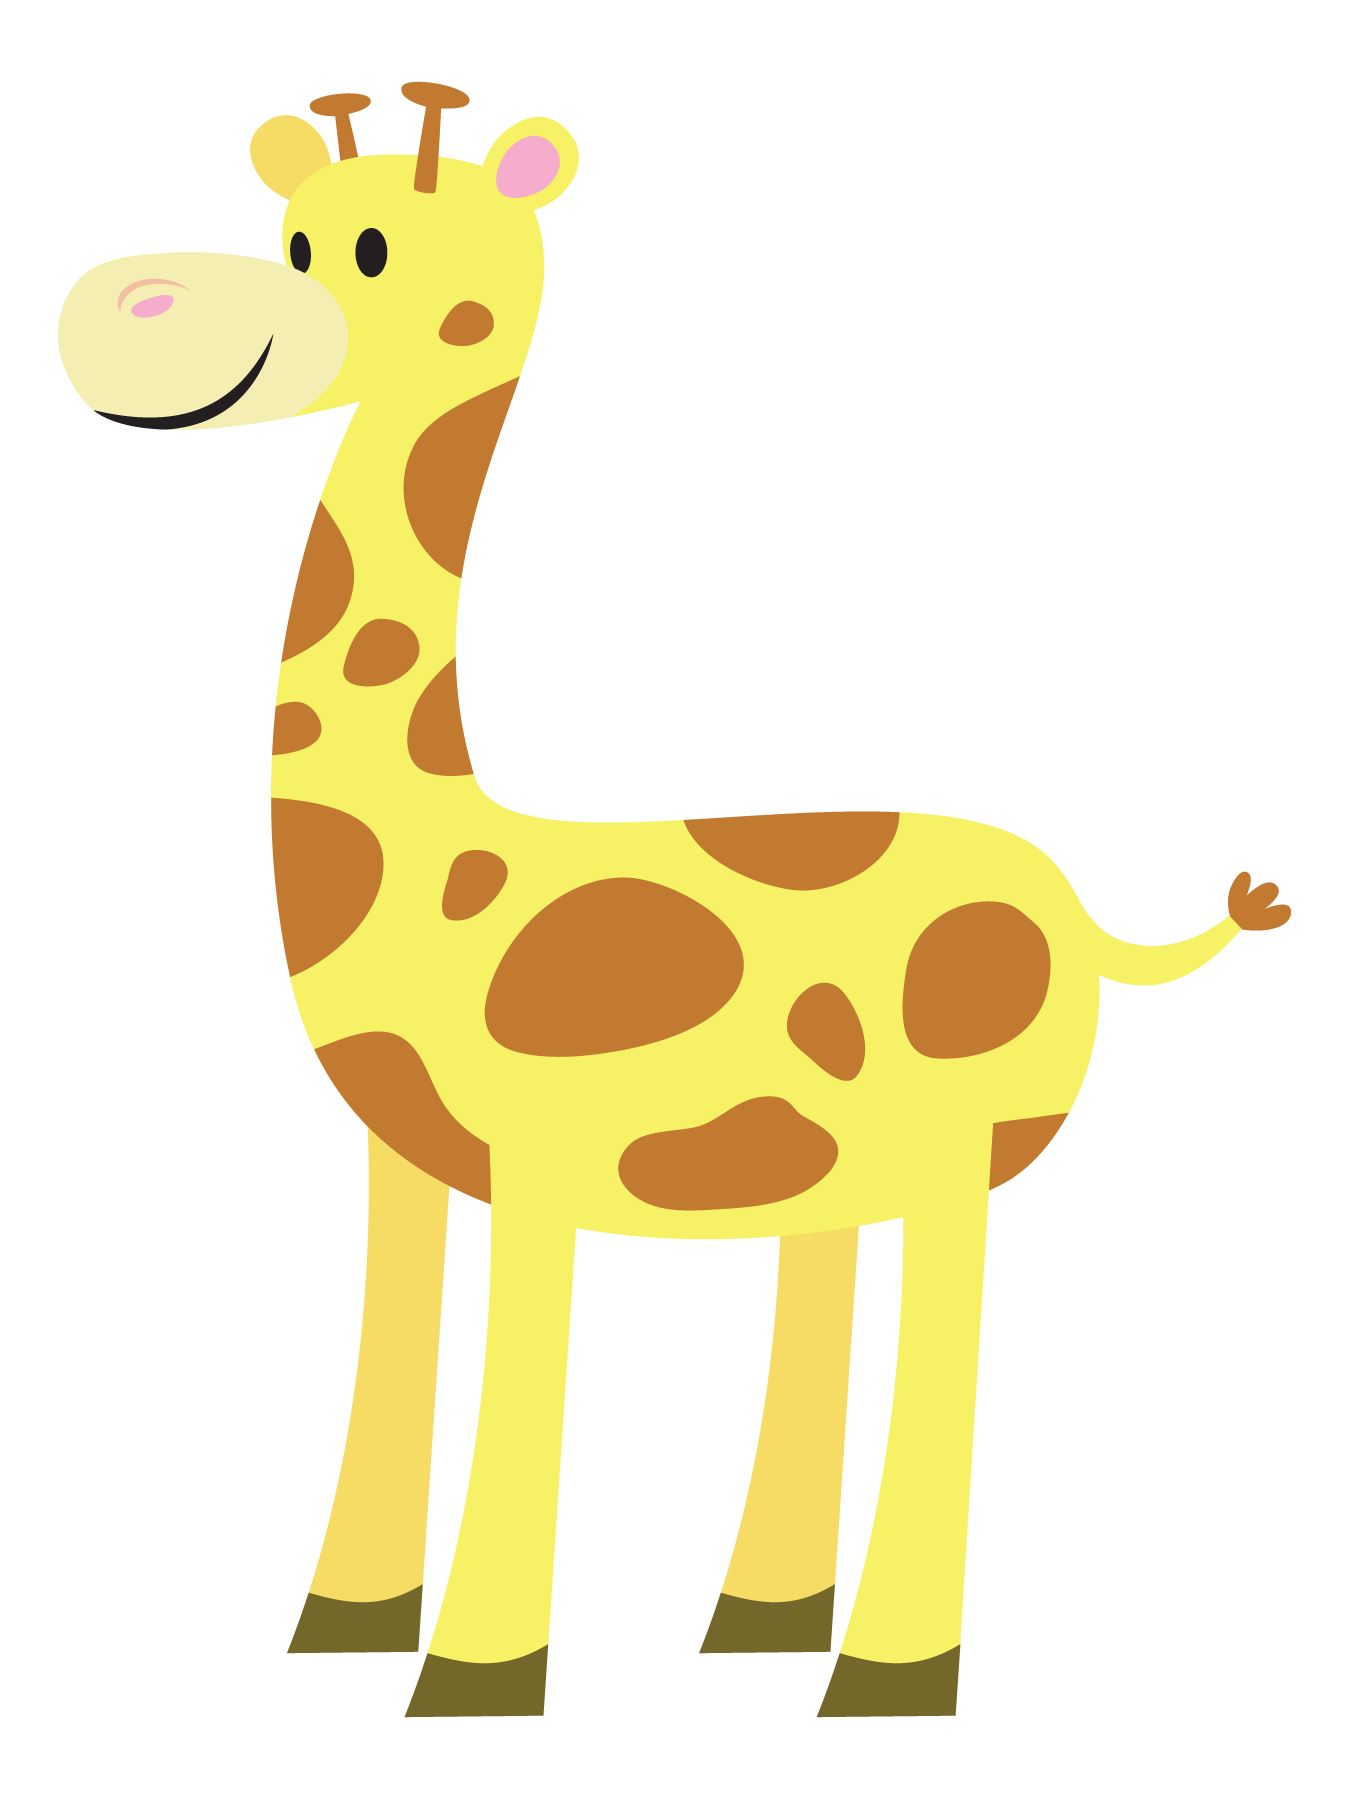 Free Giraffe Cartoon Pictures Cute, Download Free Giraffe Cartoon Pictures Cute png images, Free